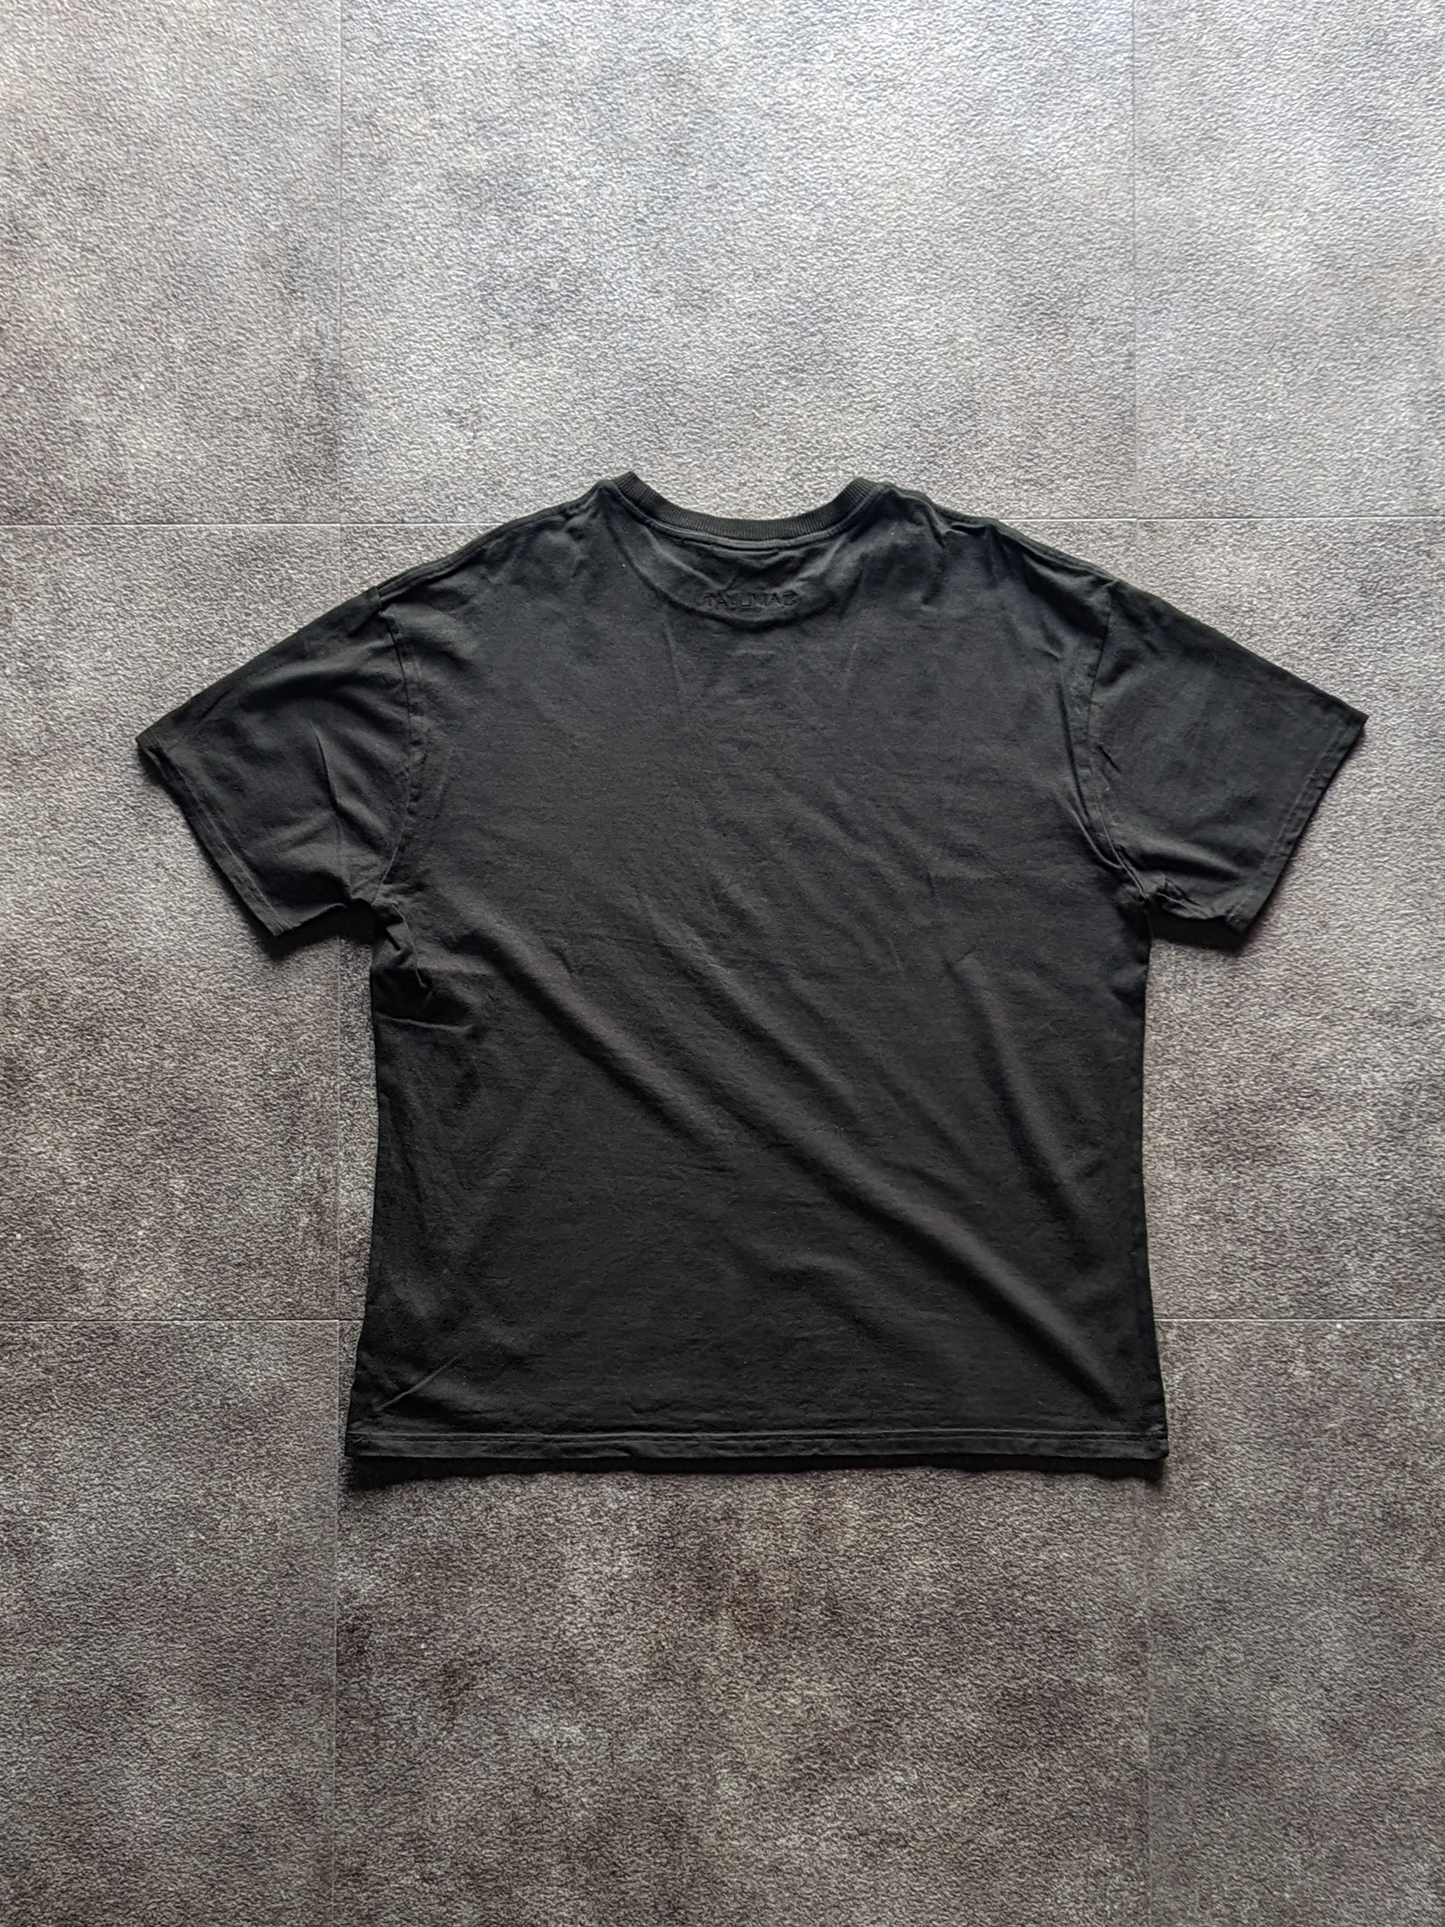 Washed cotton T-shirt black